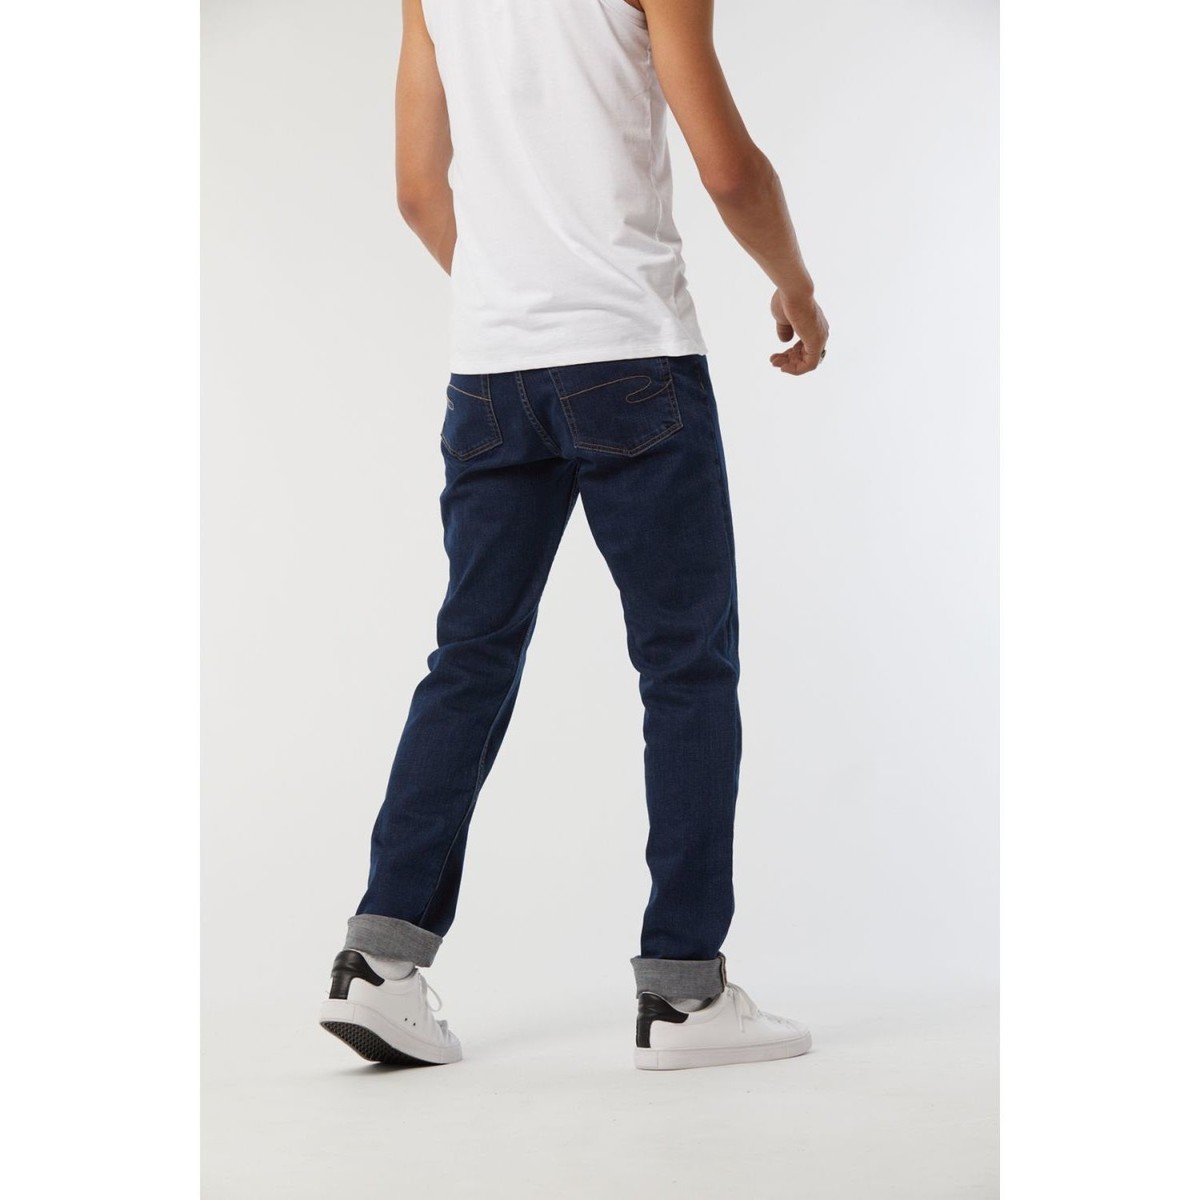 Lee Cooper Bleu Jeans LC118 Eco stone - L34 xnvVoYjb